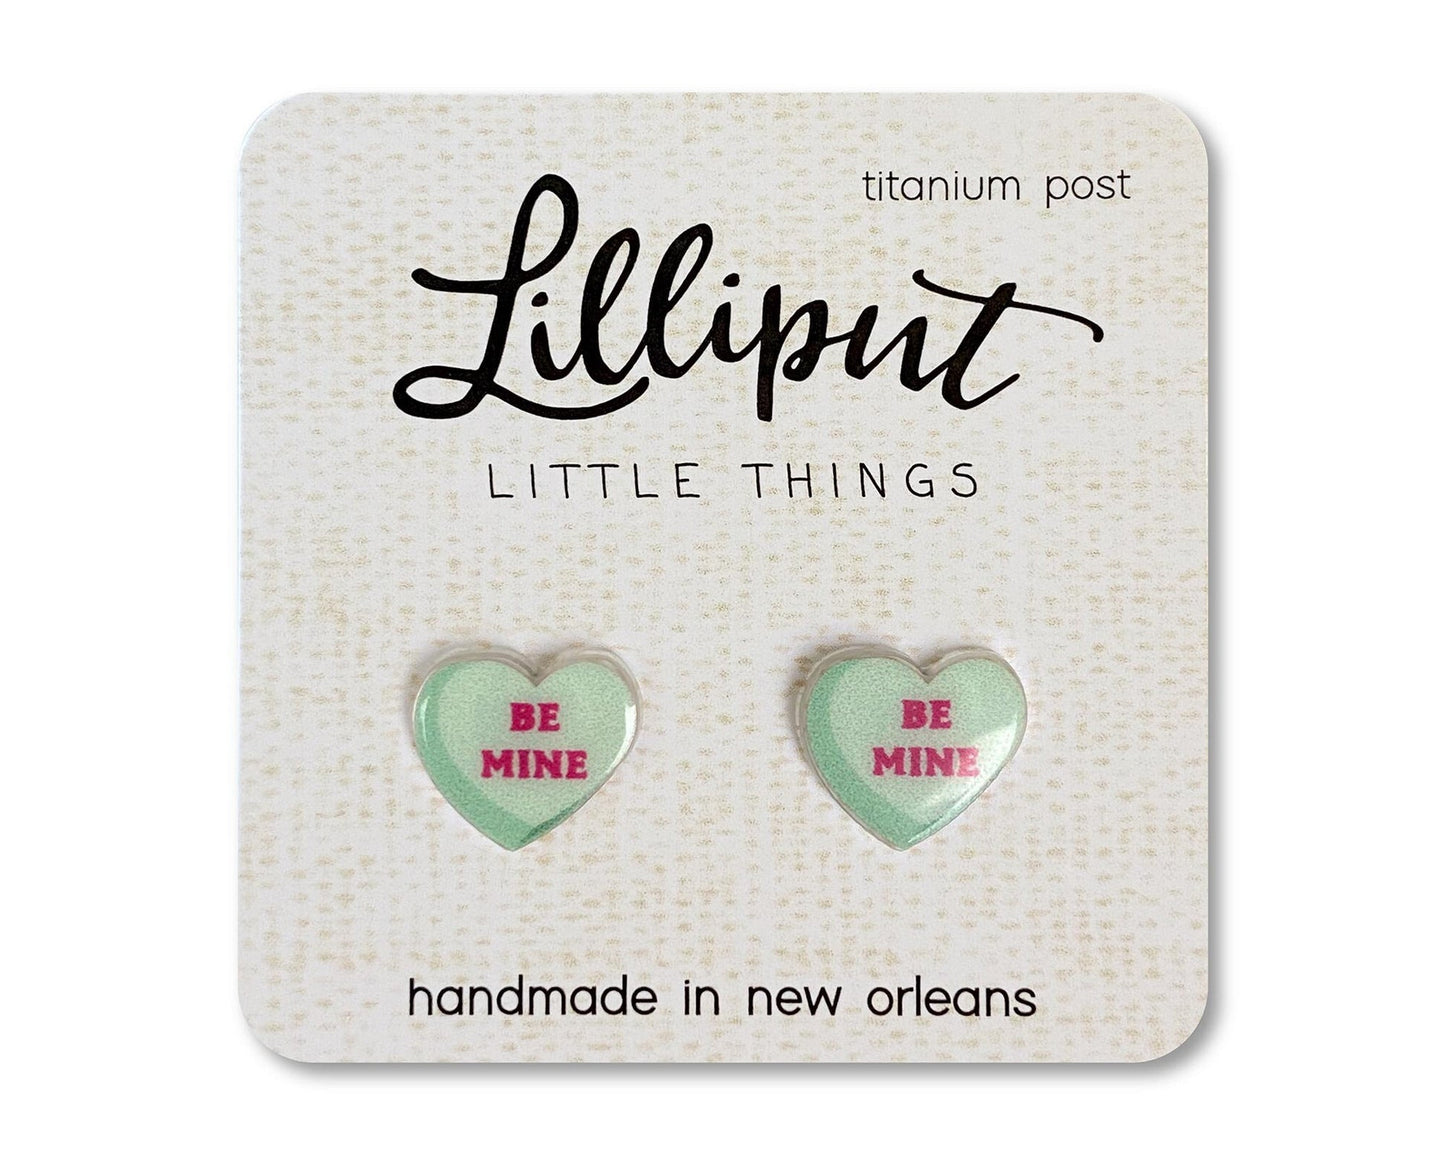 Lilliput Conversation Heart Earrings Green Be Mine Titanium Post, Hypoallergenic, 100% Nickel-free.